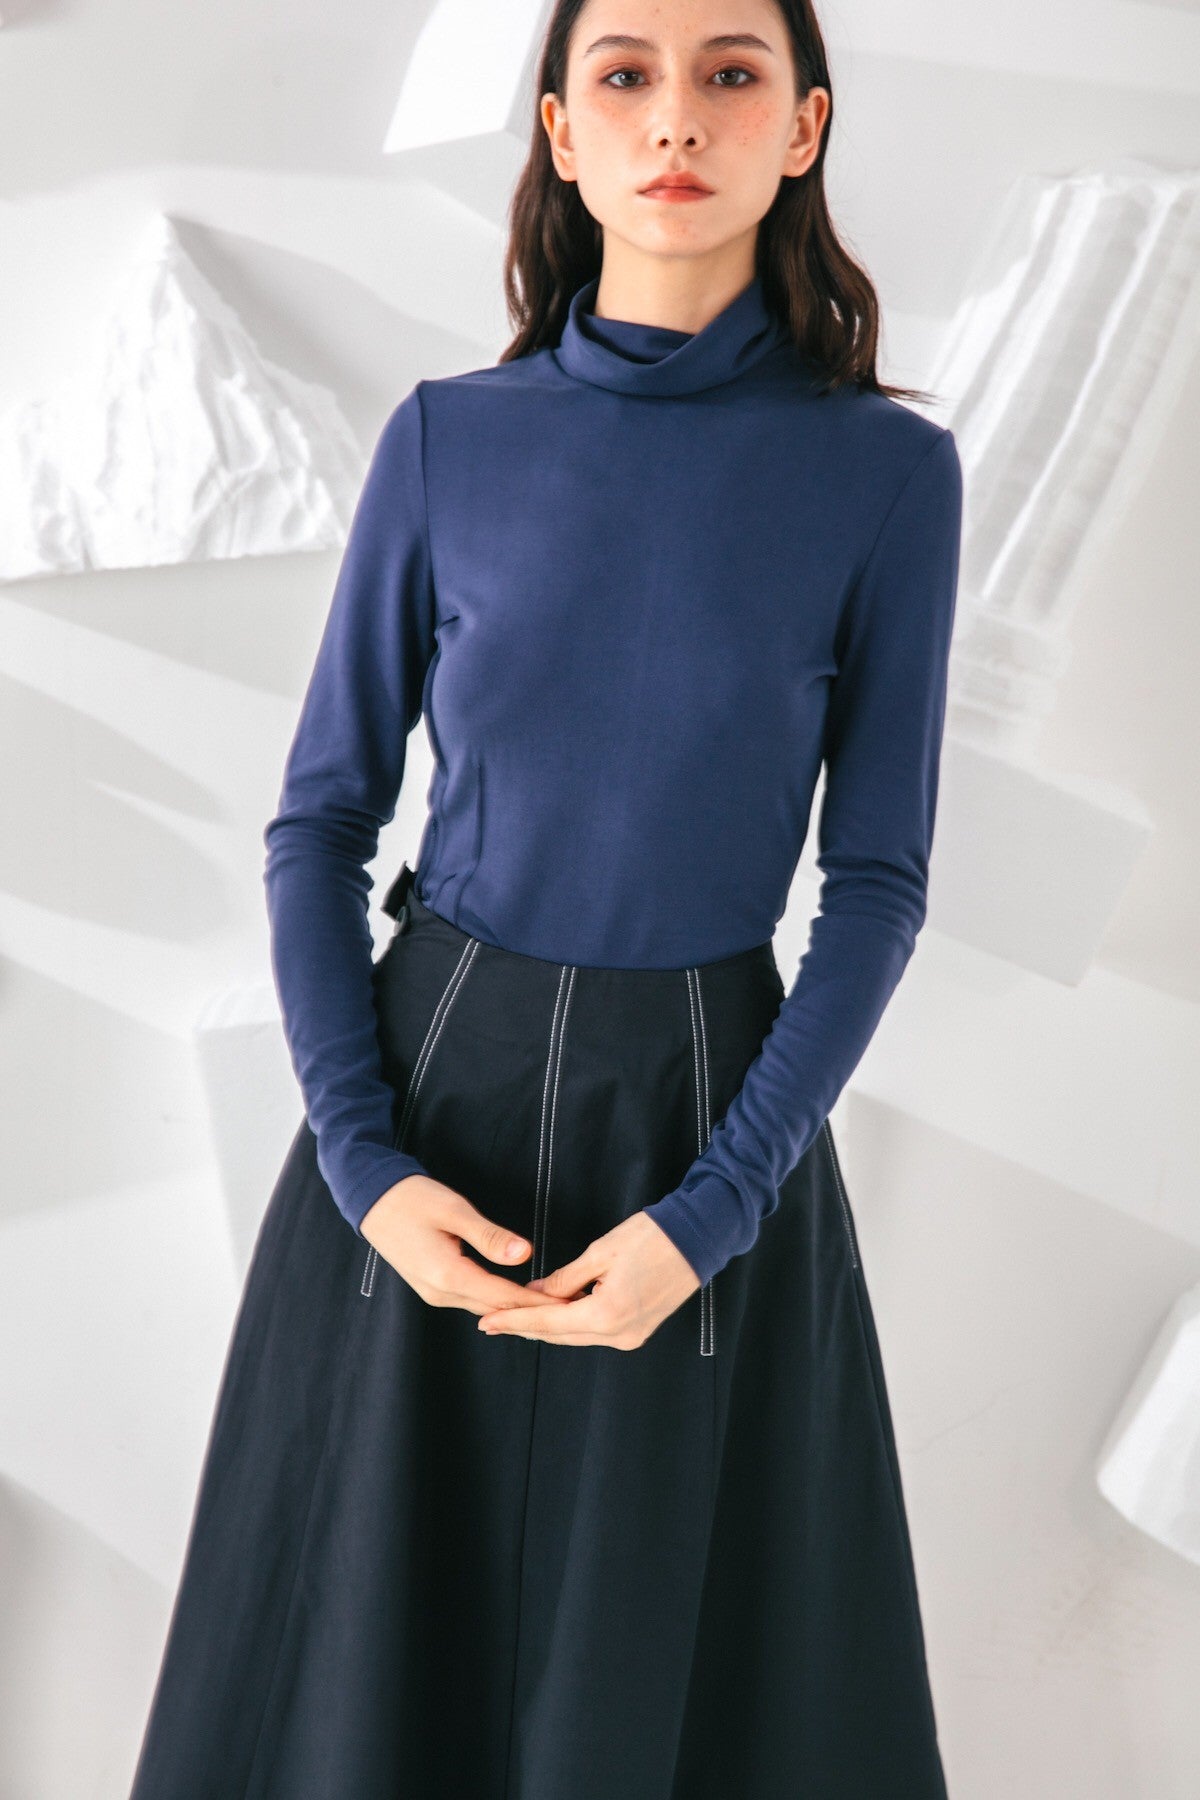 SKYE San Francisco SF shop ethical modern minimalist quality women clothing fashion Jeanne Midi Skirt blue 3